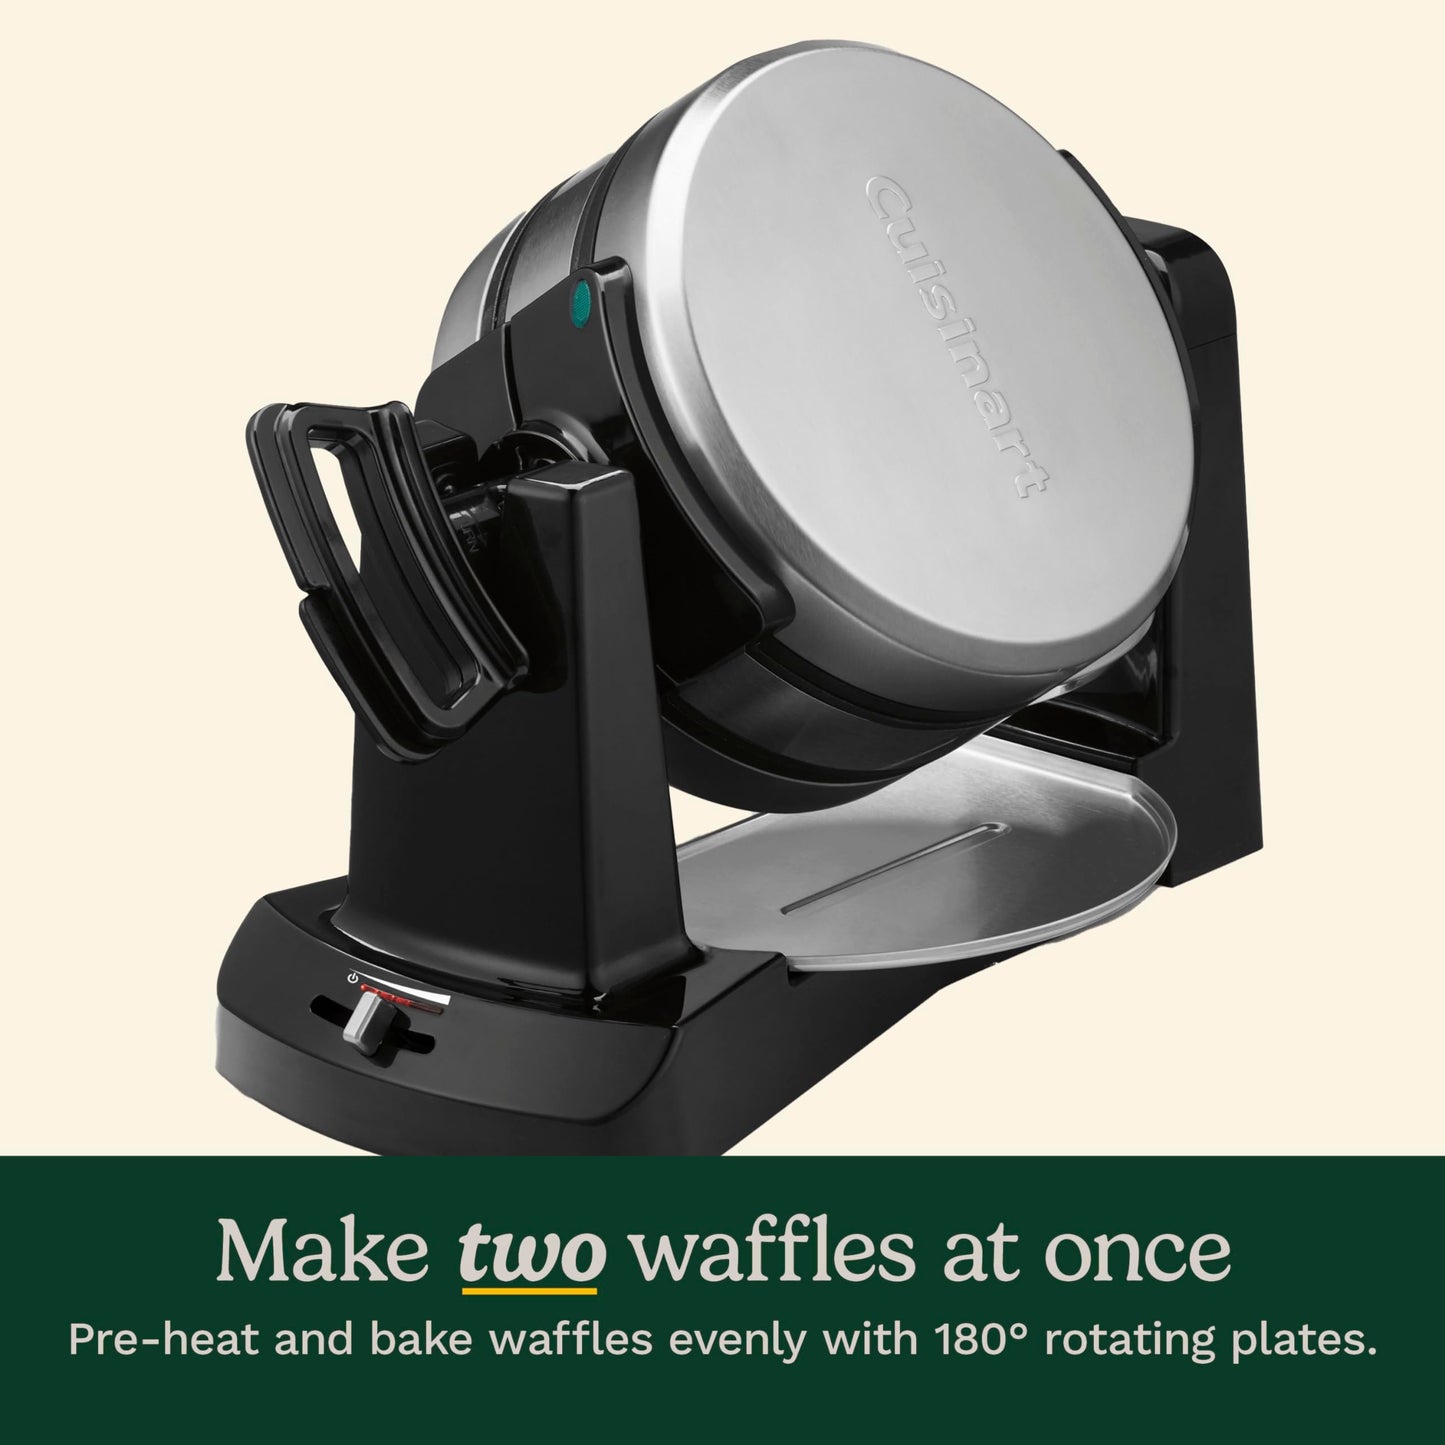 Cuisinart WAF-F40 Double Flip Belgian Waffle Maker, 1400 watts, New Black/Stainless - Like New